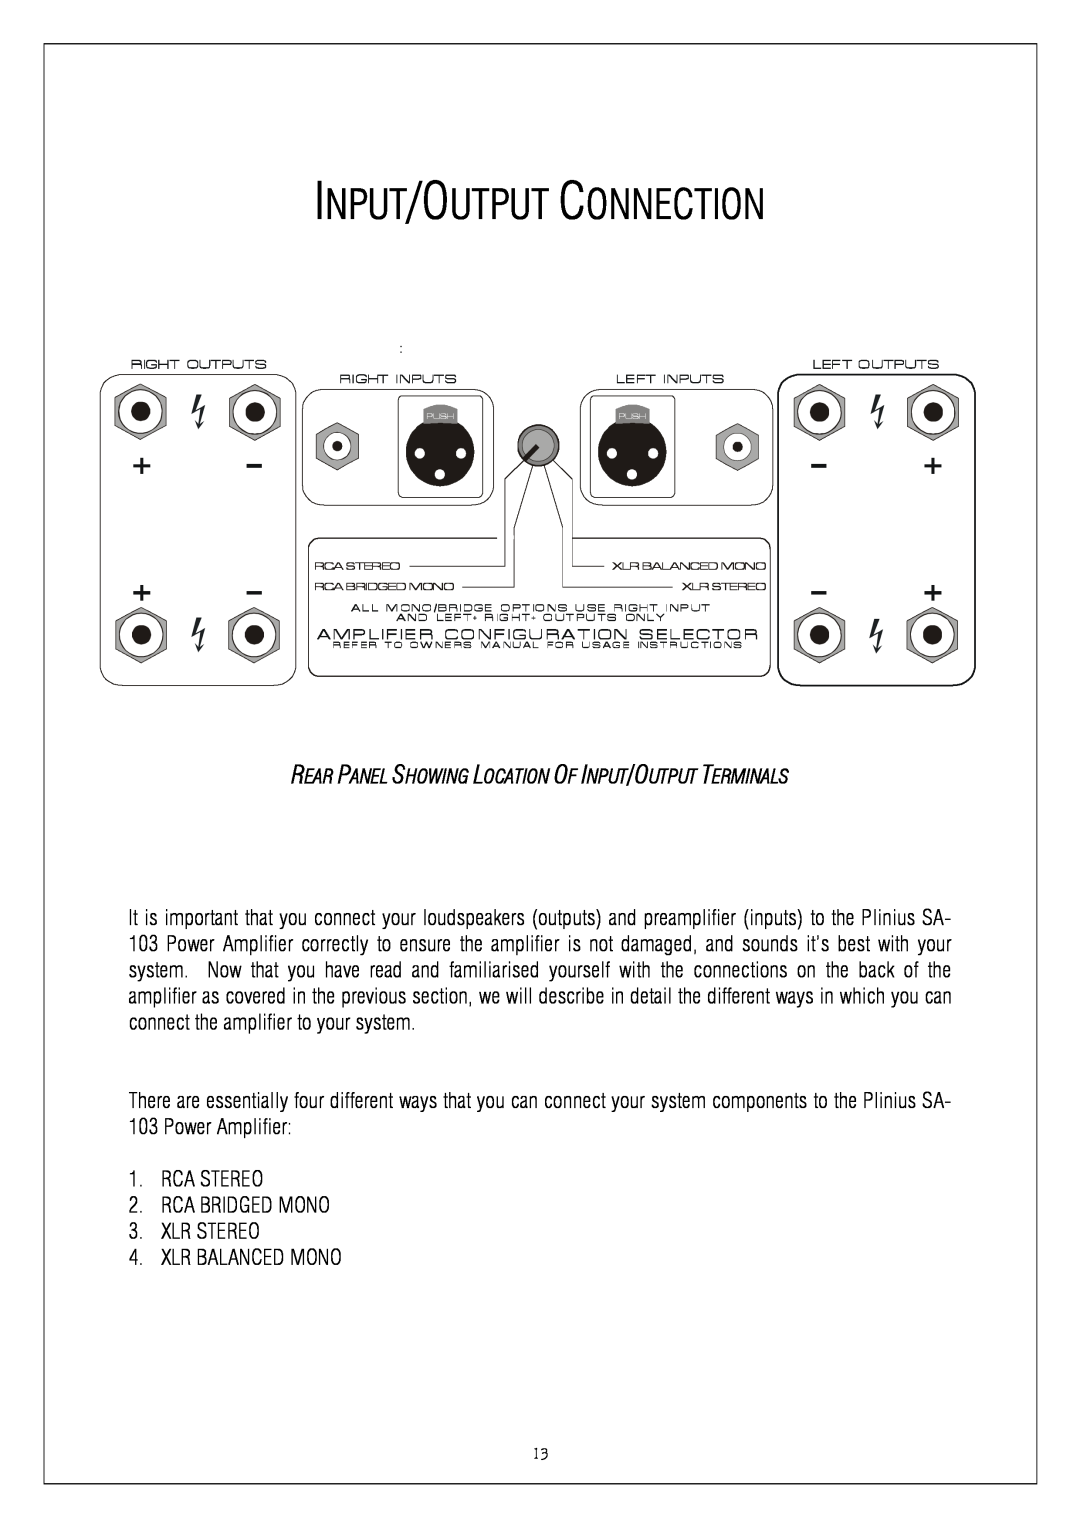 Plinius Audio SA-103 manual Input/Output Connection, Power Amplifier 1.RCA STEREO, RCA BRIDGED MONO 3.XLR STEREO 